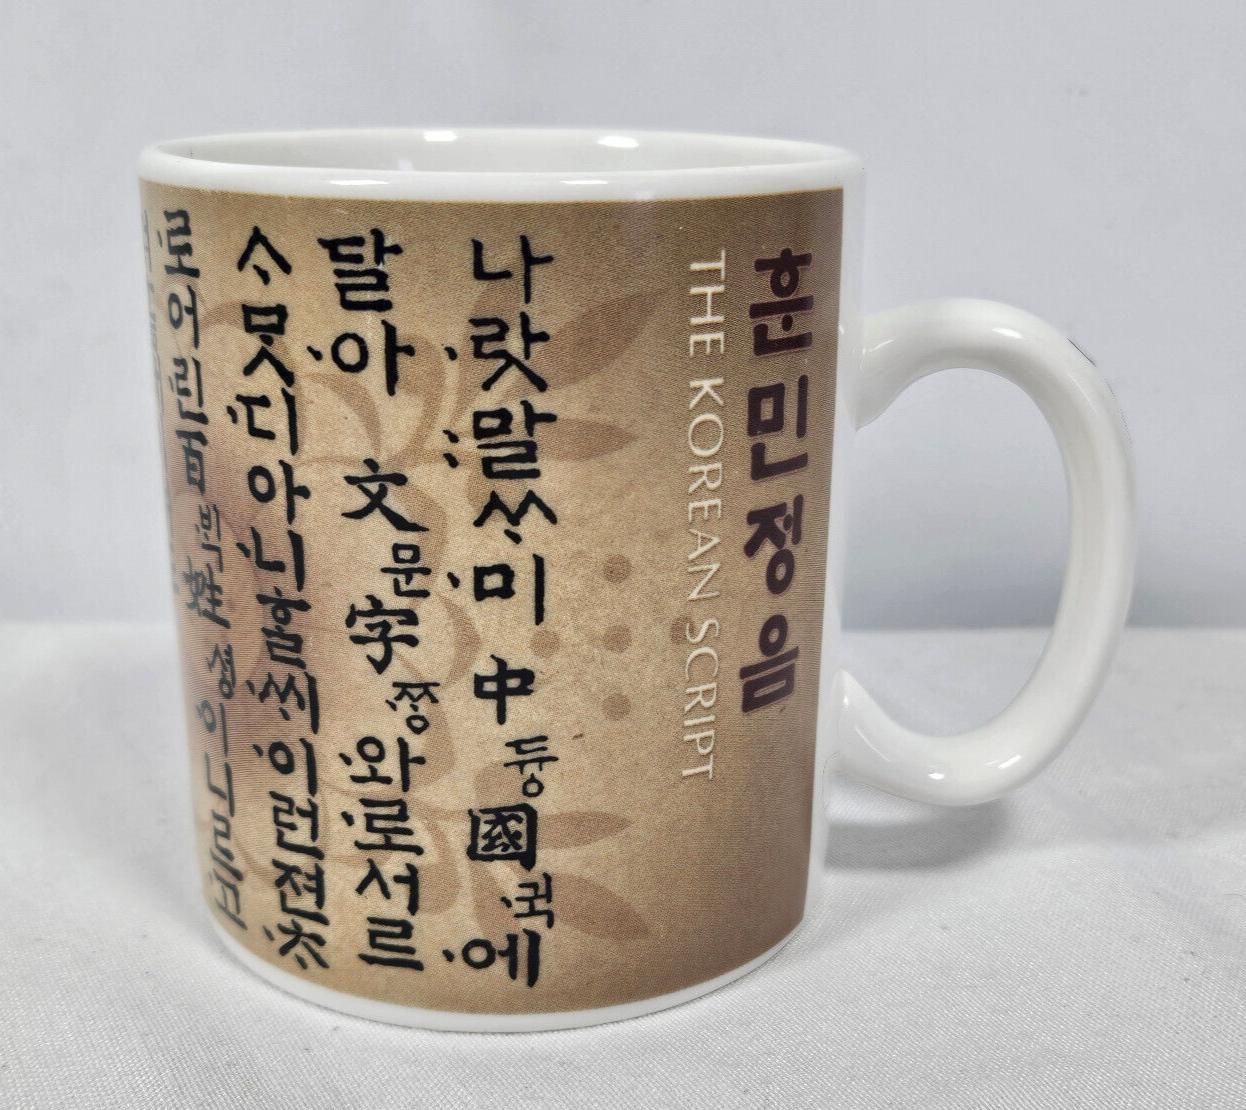 Primary image for Starbucks The Korean Script Collectible Coffee Mug 12oz 2005 Made in Korea